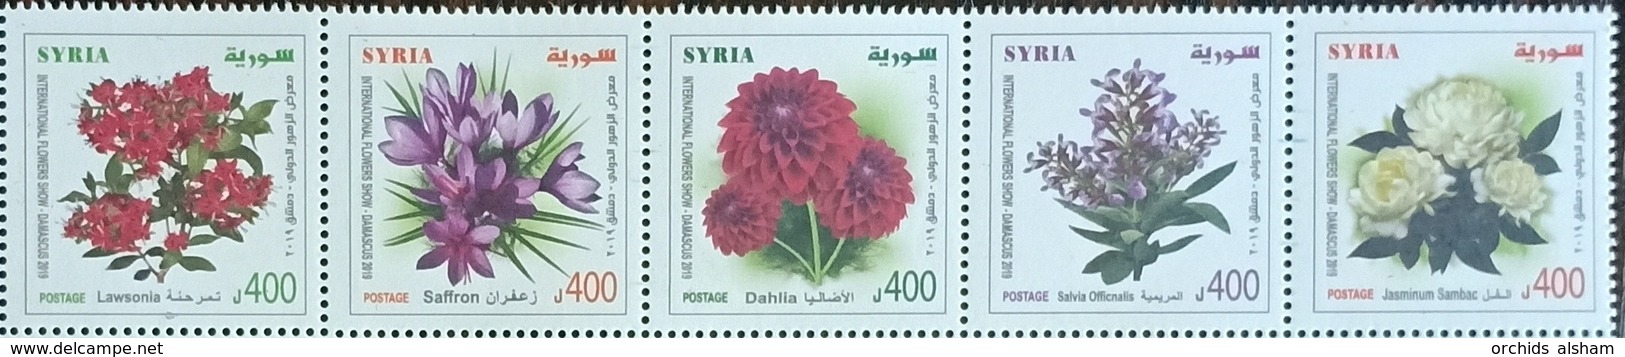 Syria 2019 NEW MNH Set - Flowers - Syrien